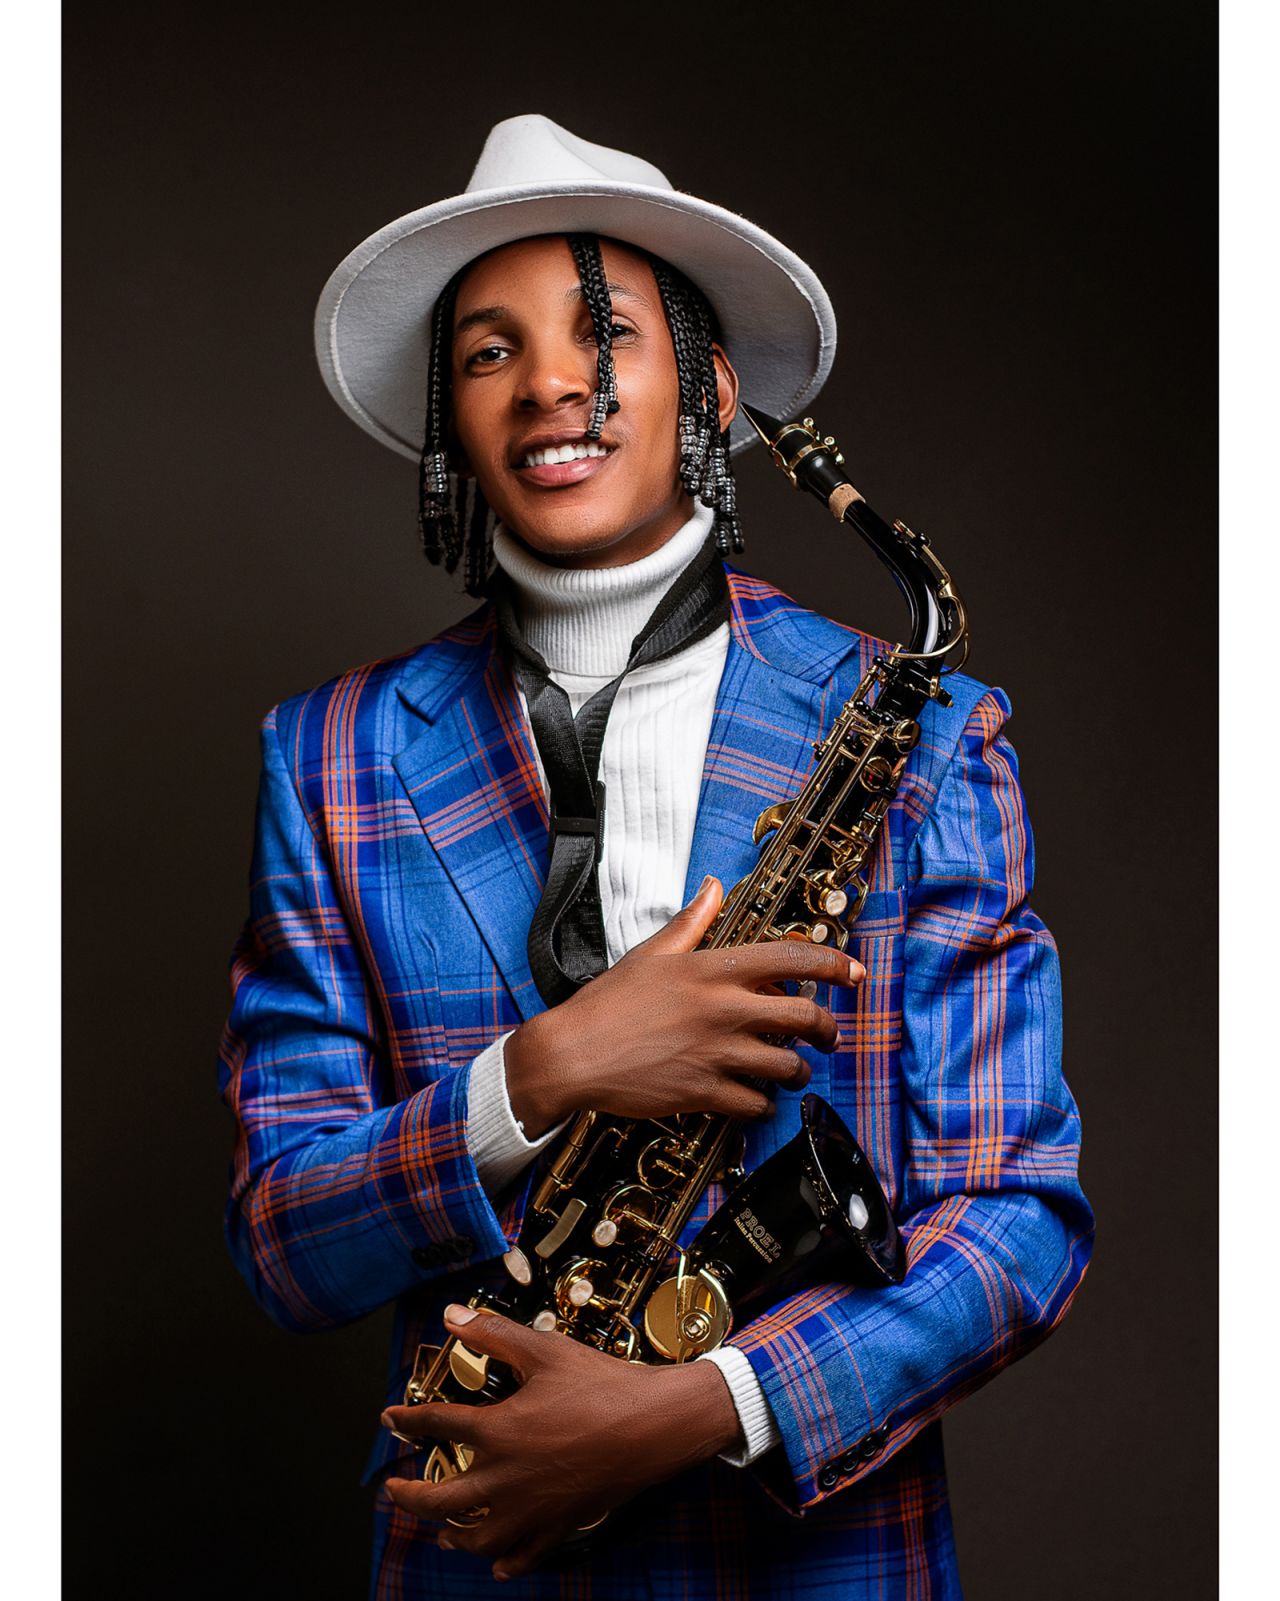 Nigerian photographer Samakinwa Emmanuel Temitope commemorates three years of playing the saxophone.